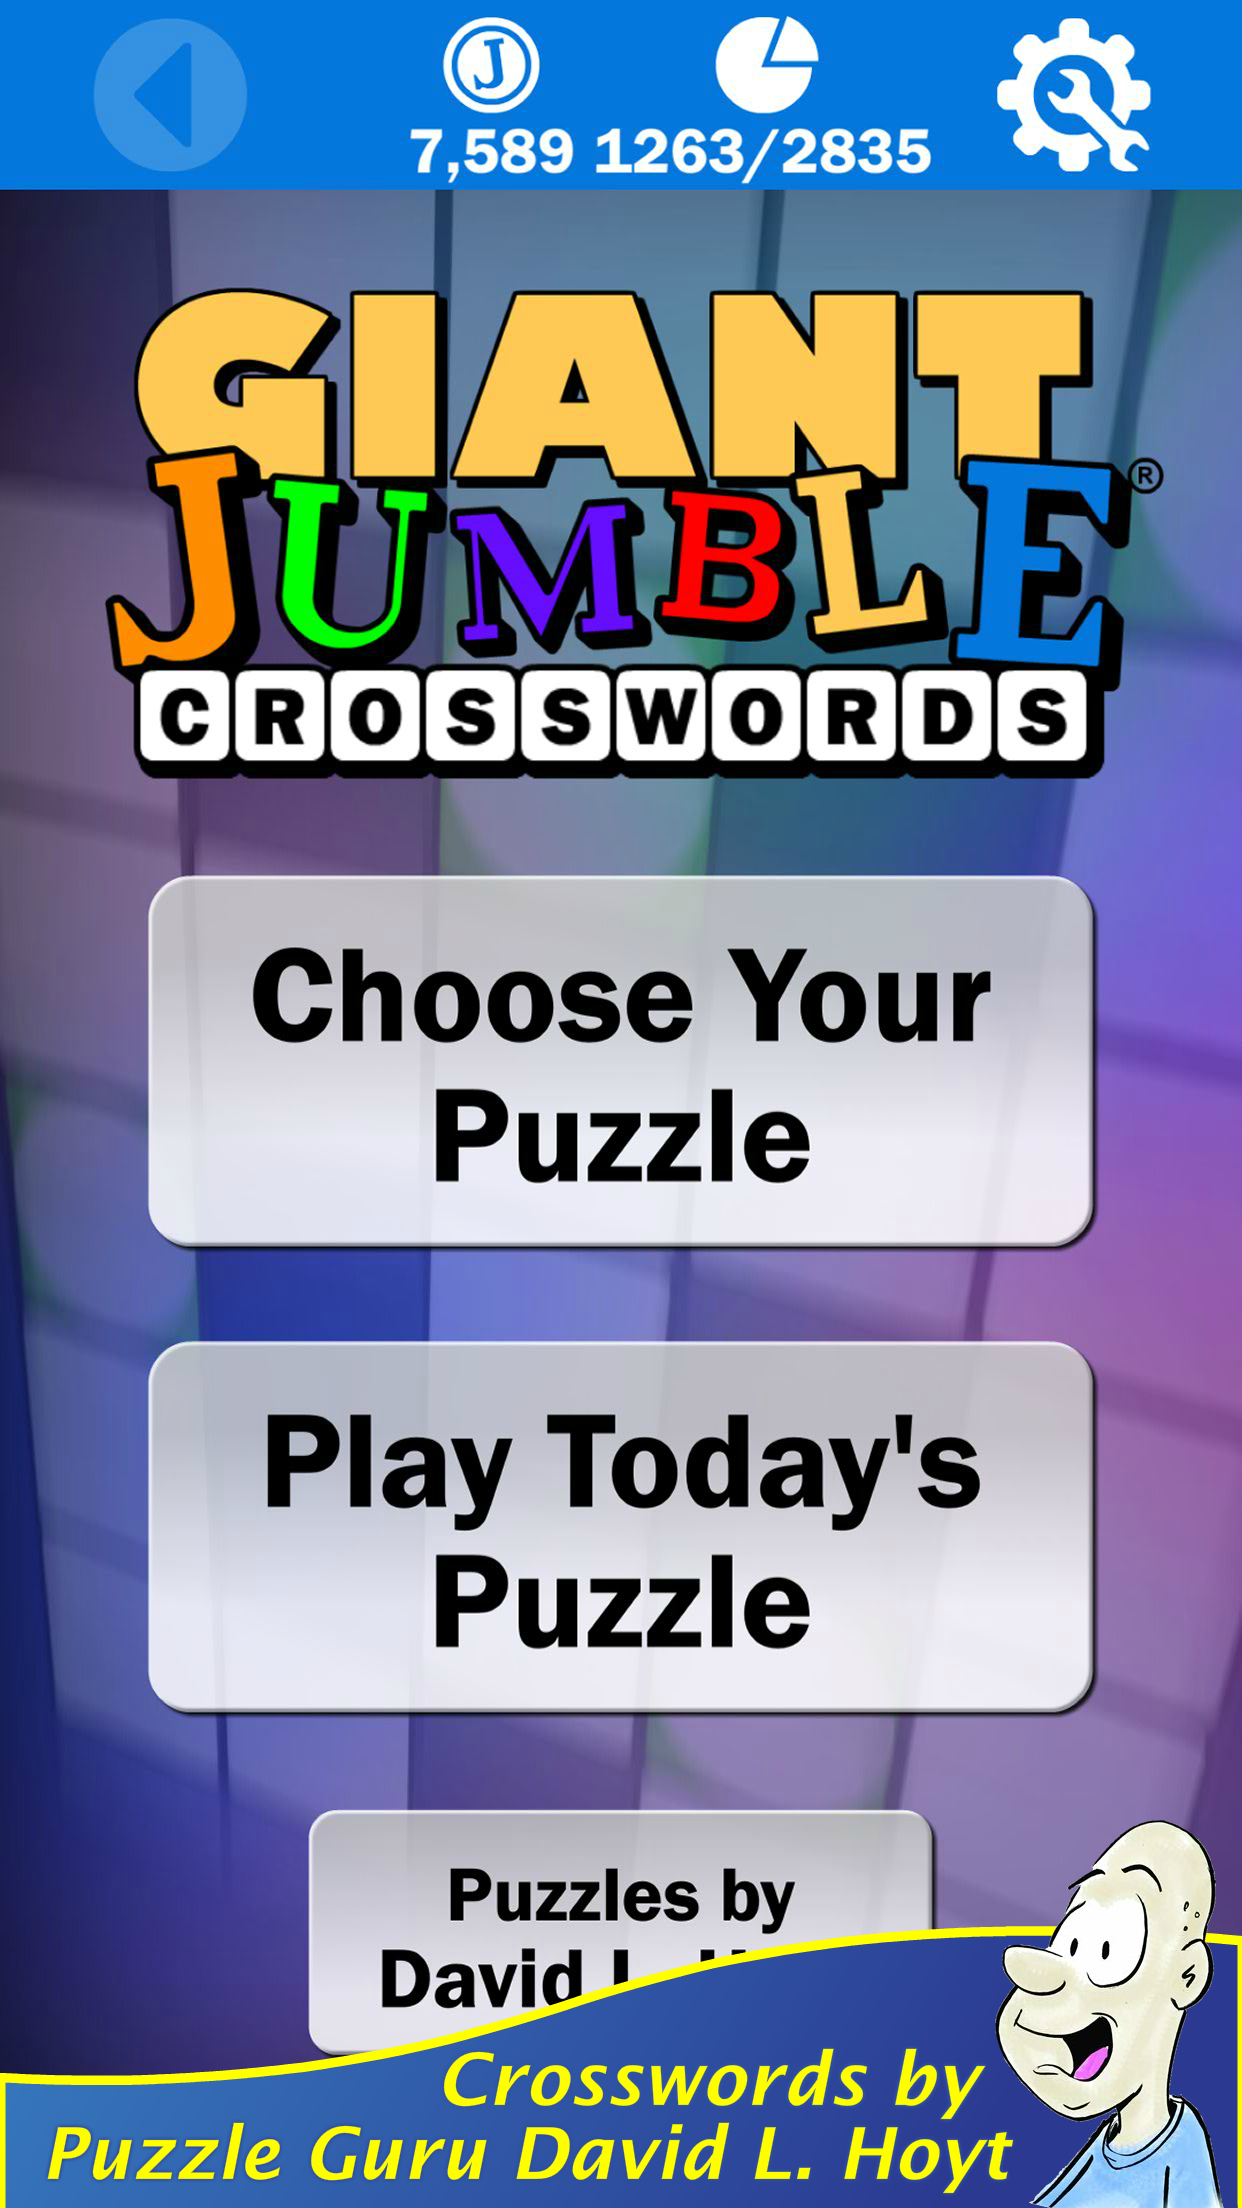 Just 2 Words - THURSDAY JUMBLE CROSSWORD PUZZLE + 2